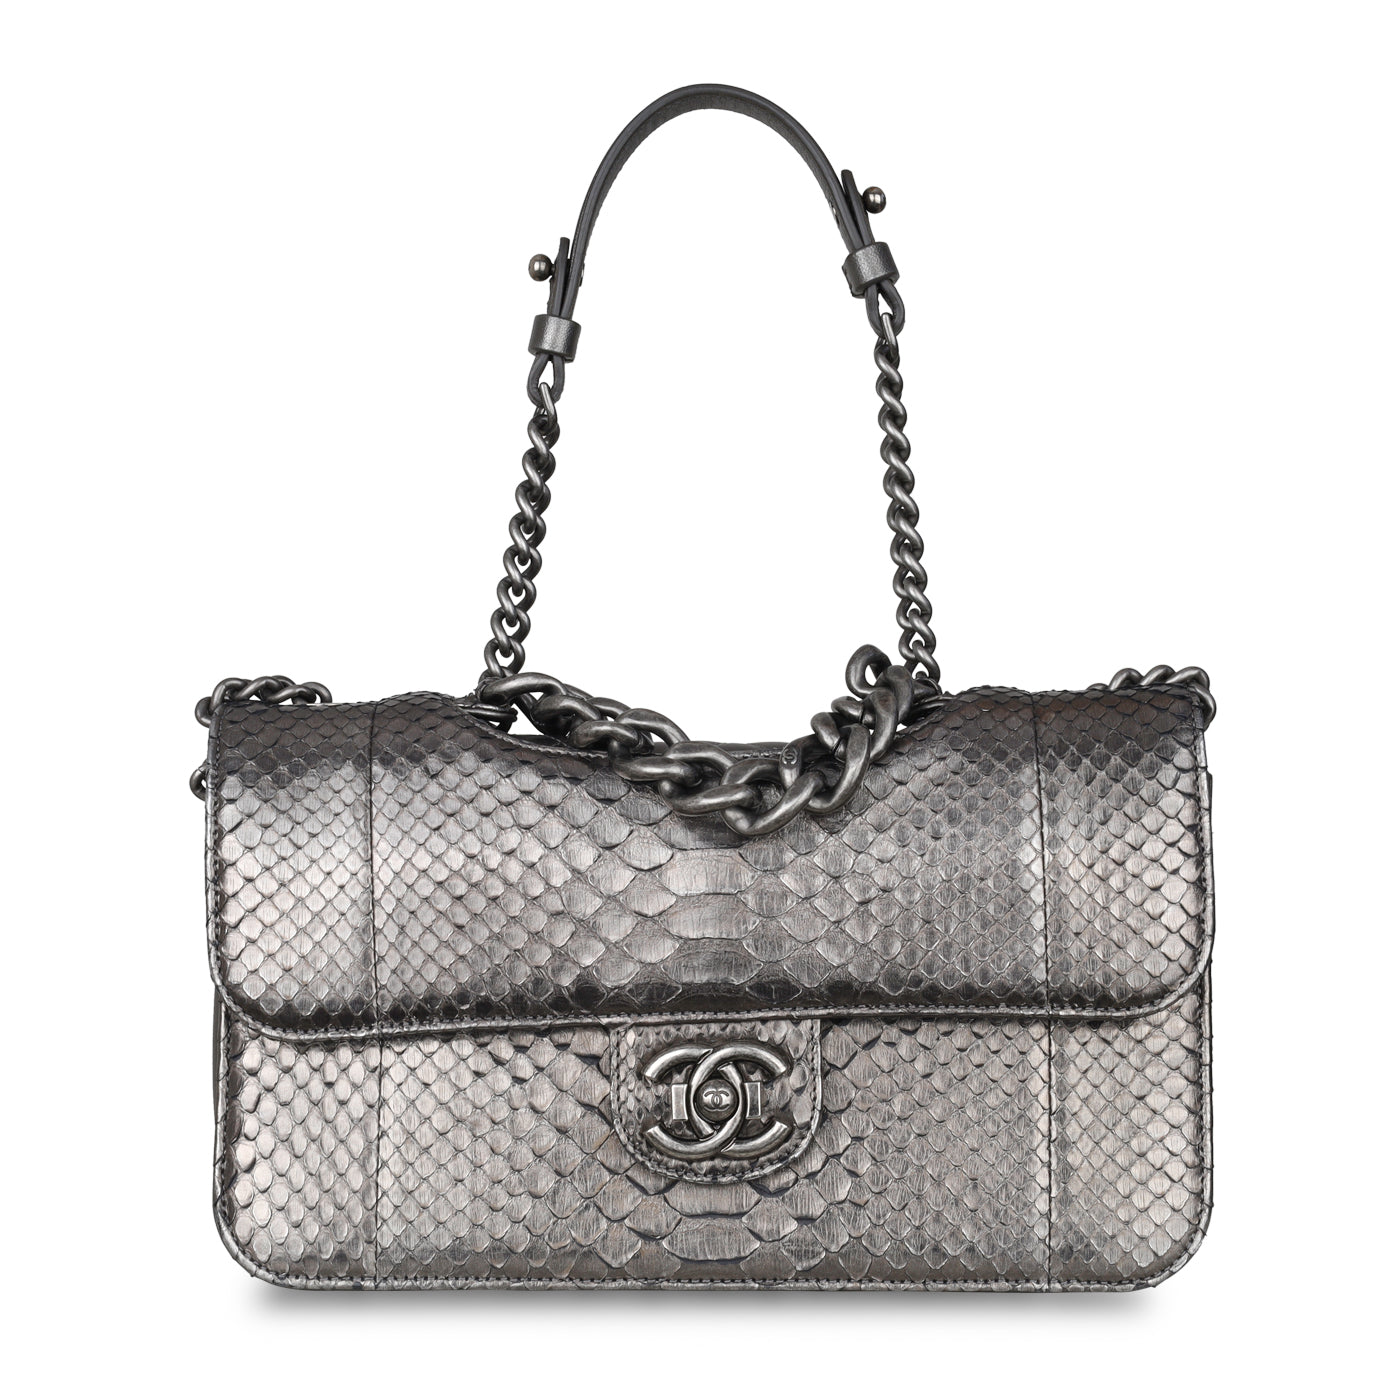 Chanel Metallic Silver Quilted Chevron Caviar Small Boy Bag